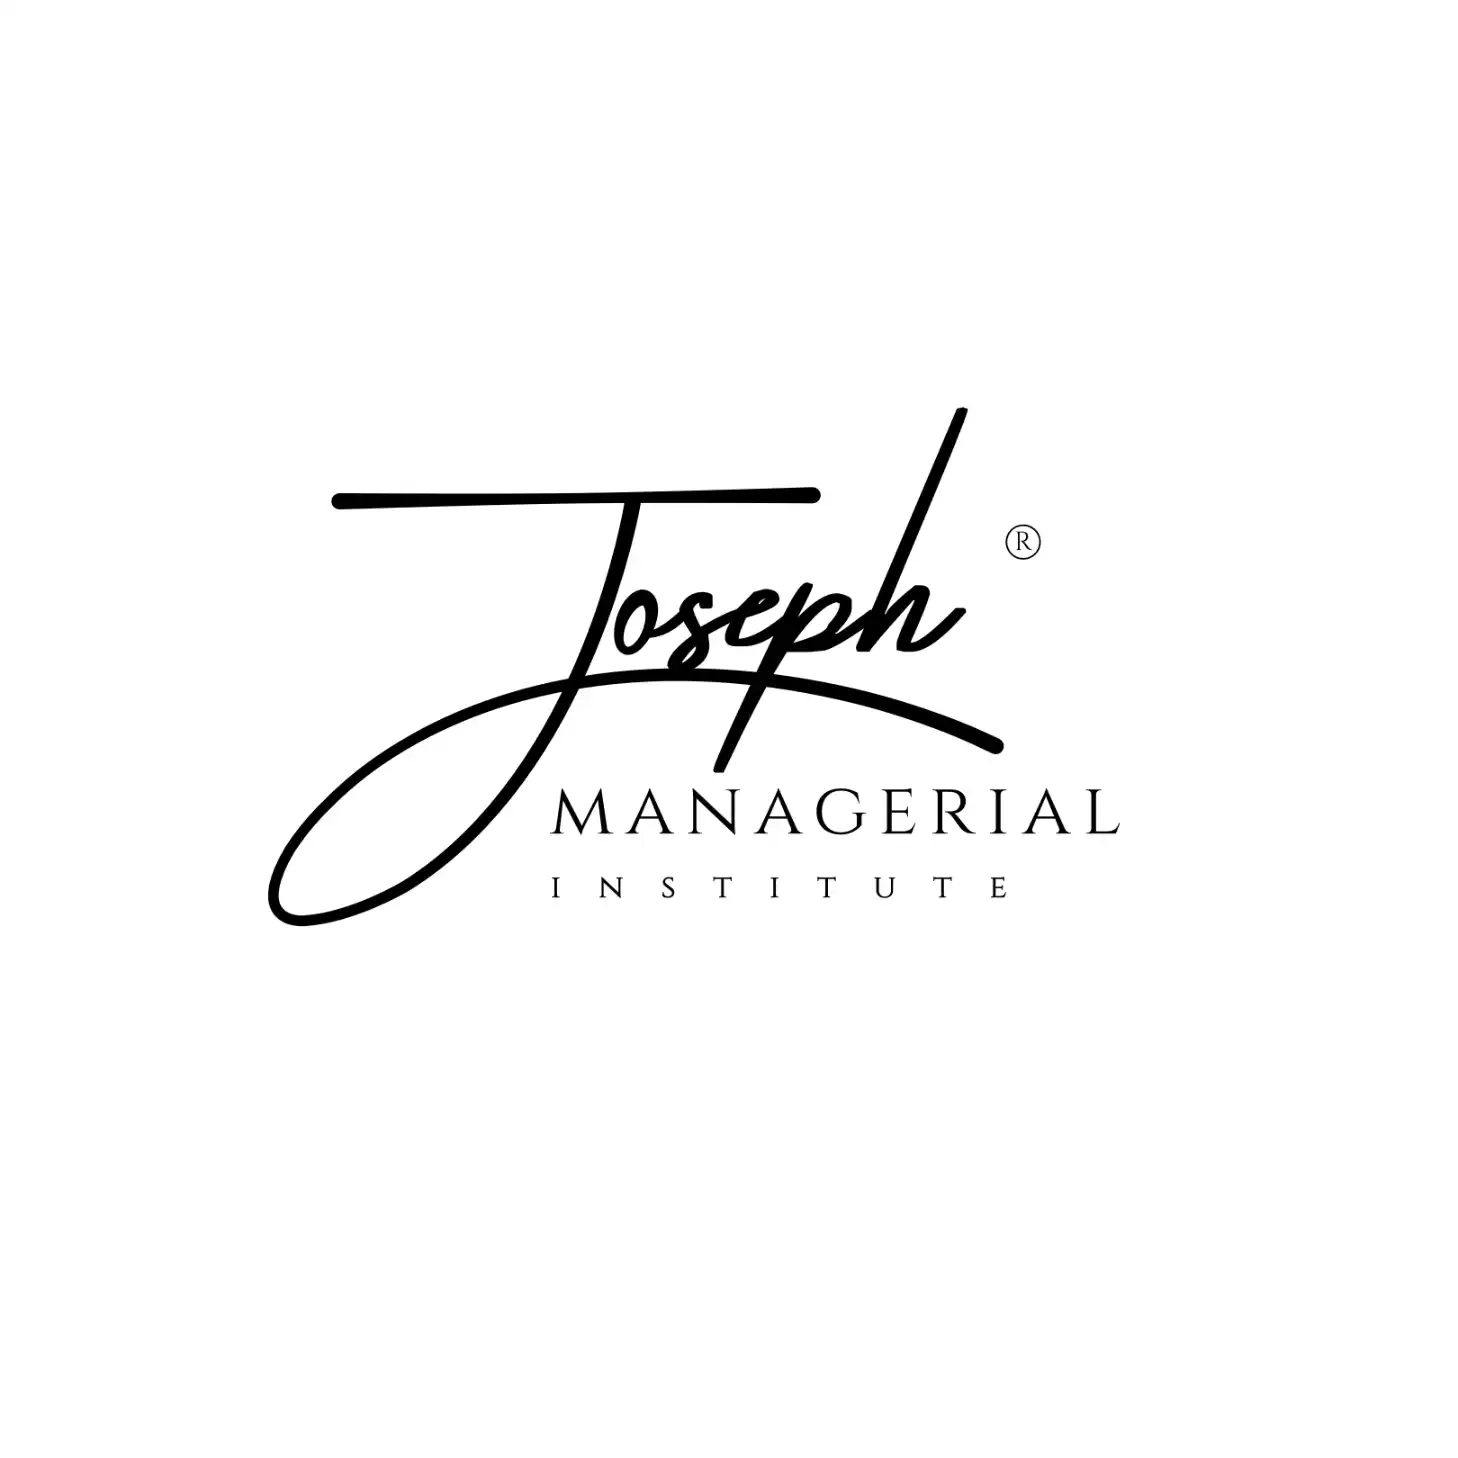 Jospeh Managerial Institute By Noble Daniel (1)